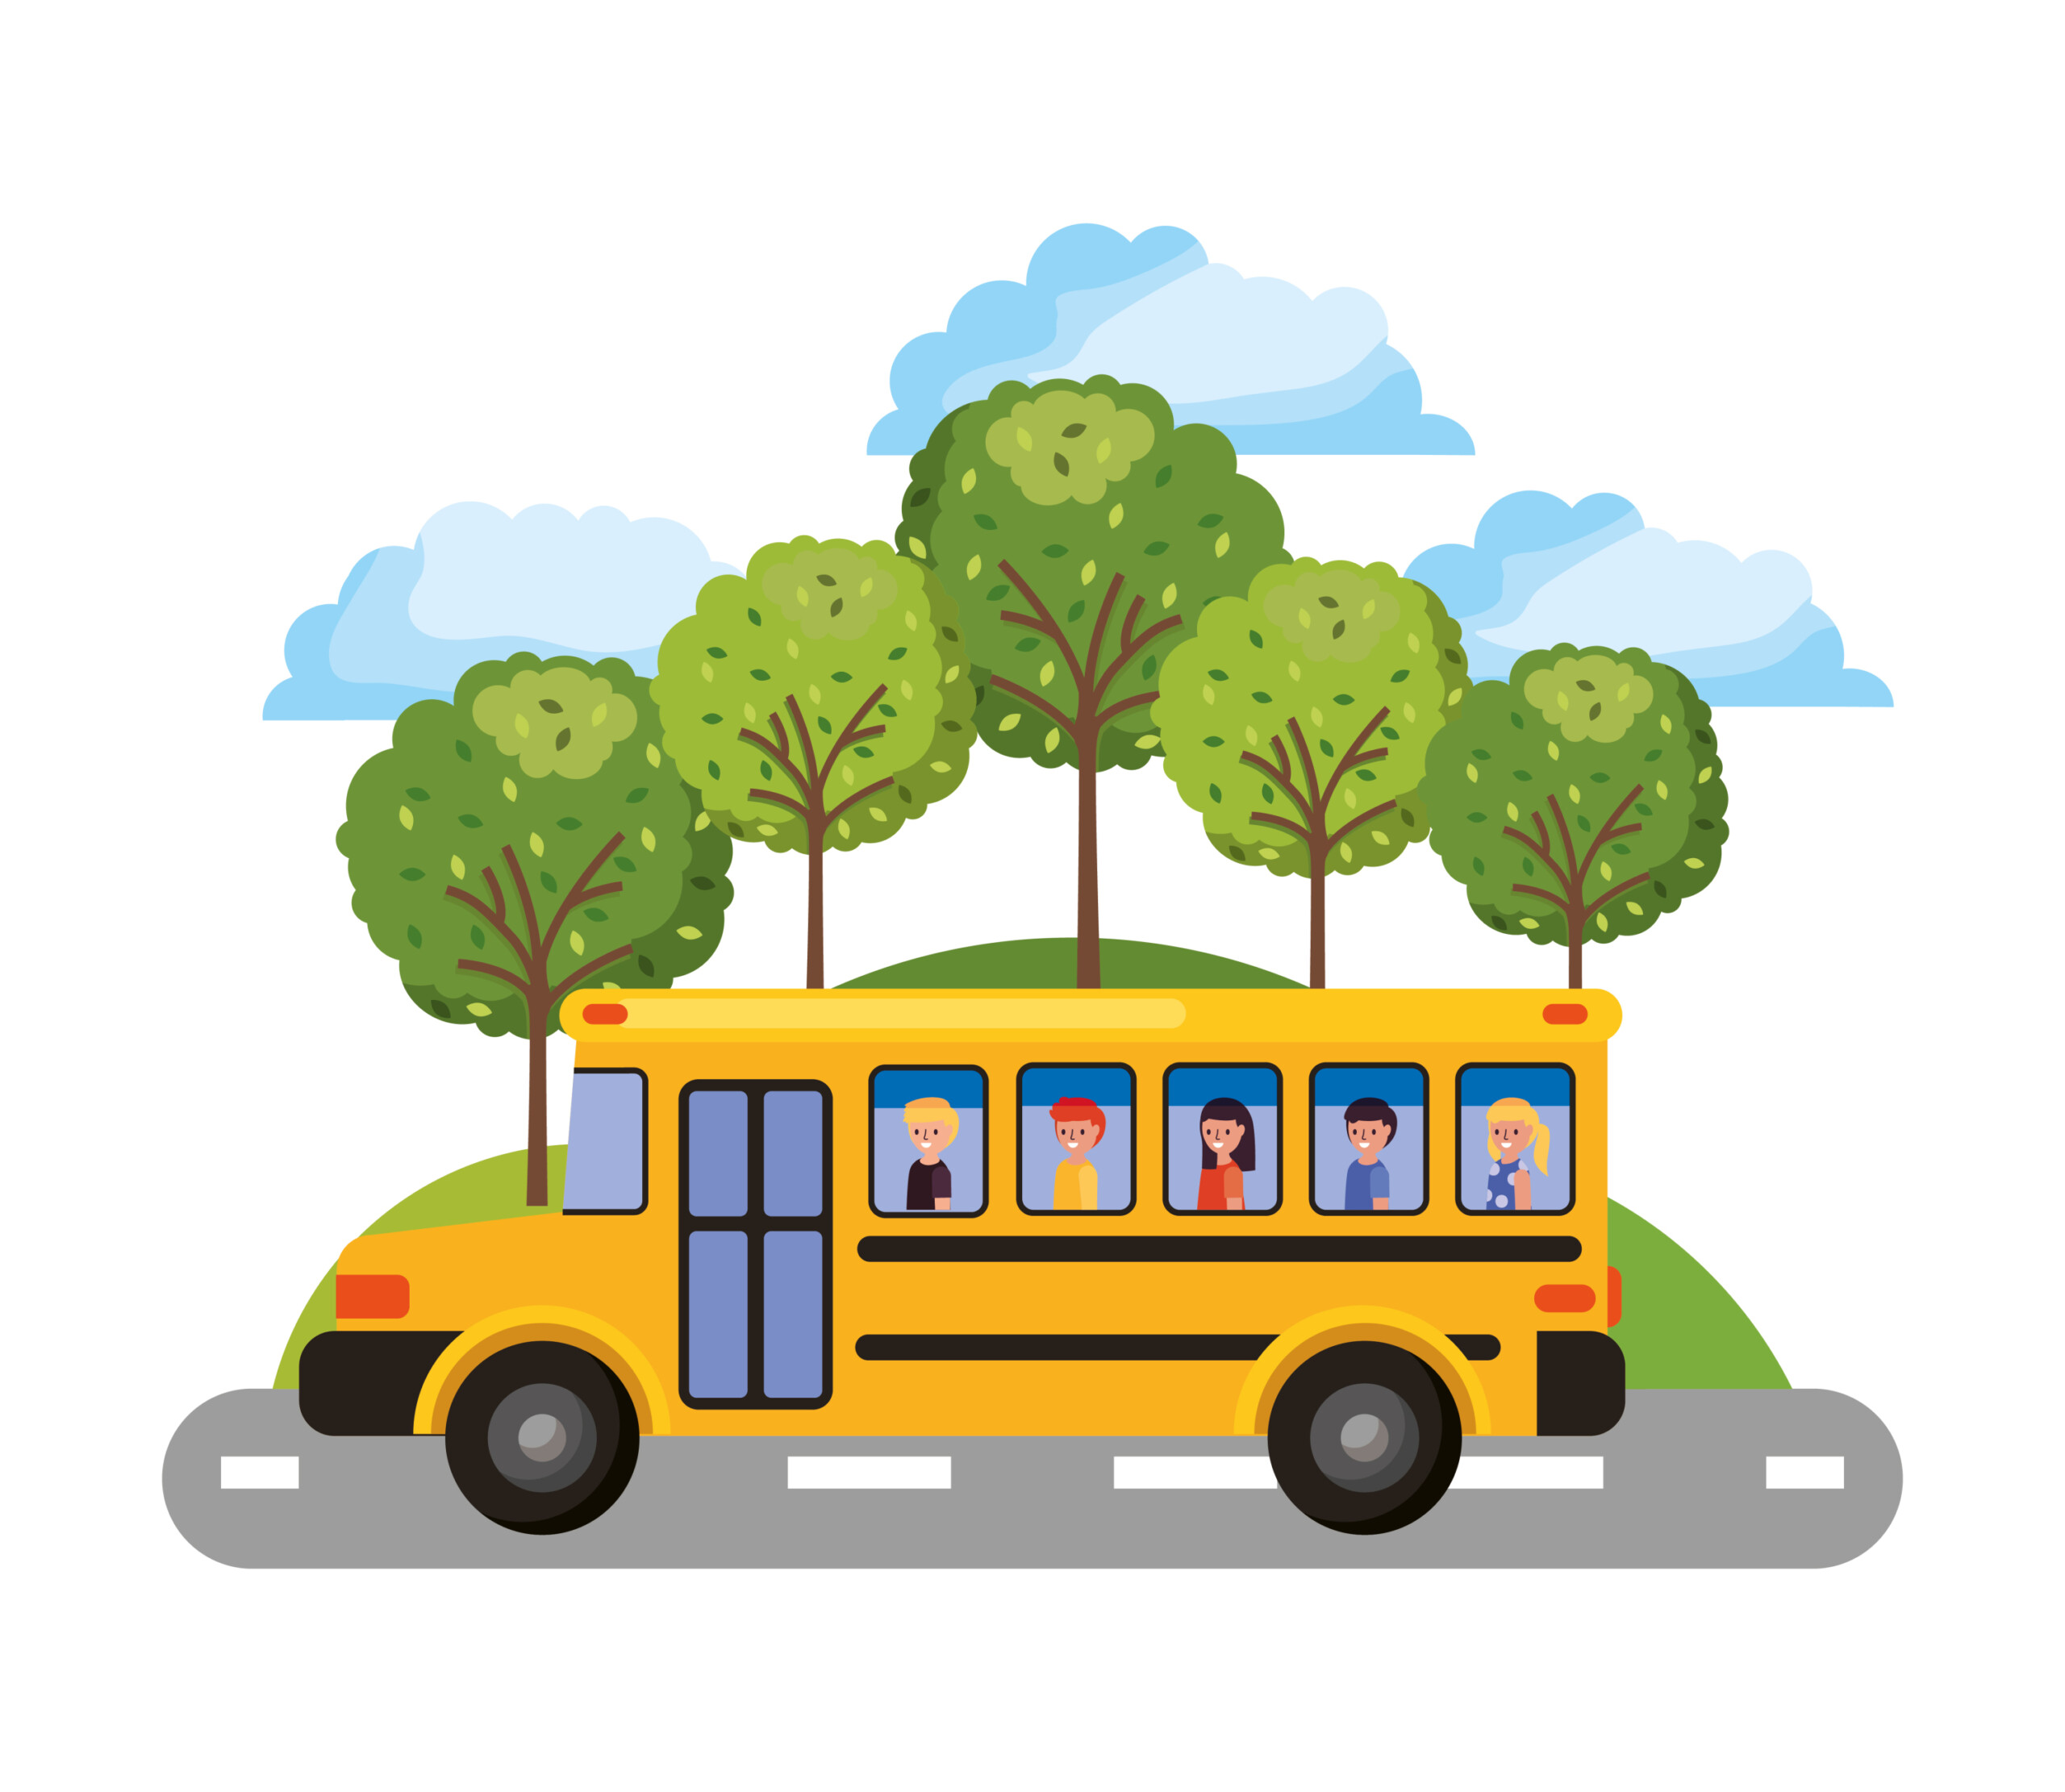 Yellow School Bus - Original image